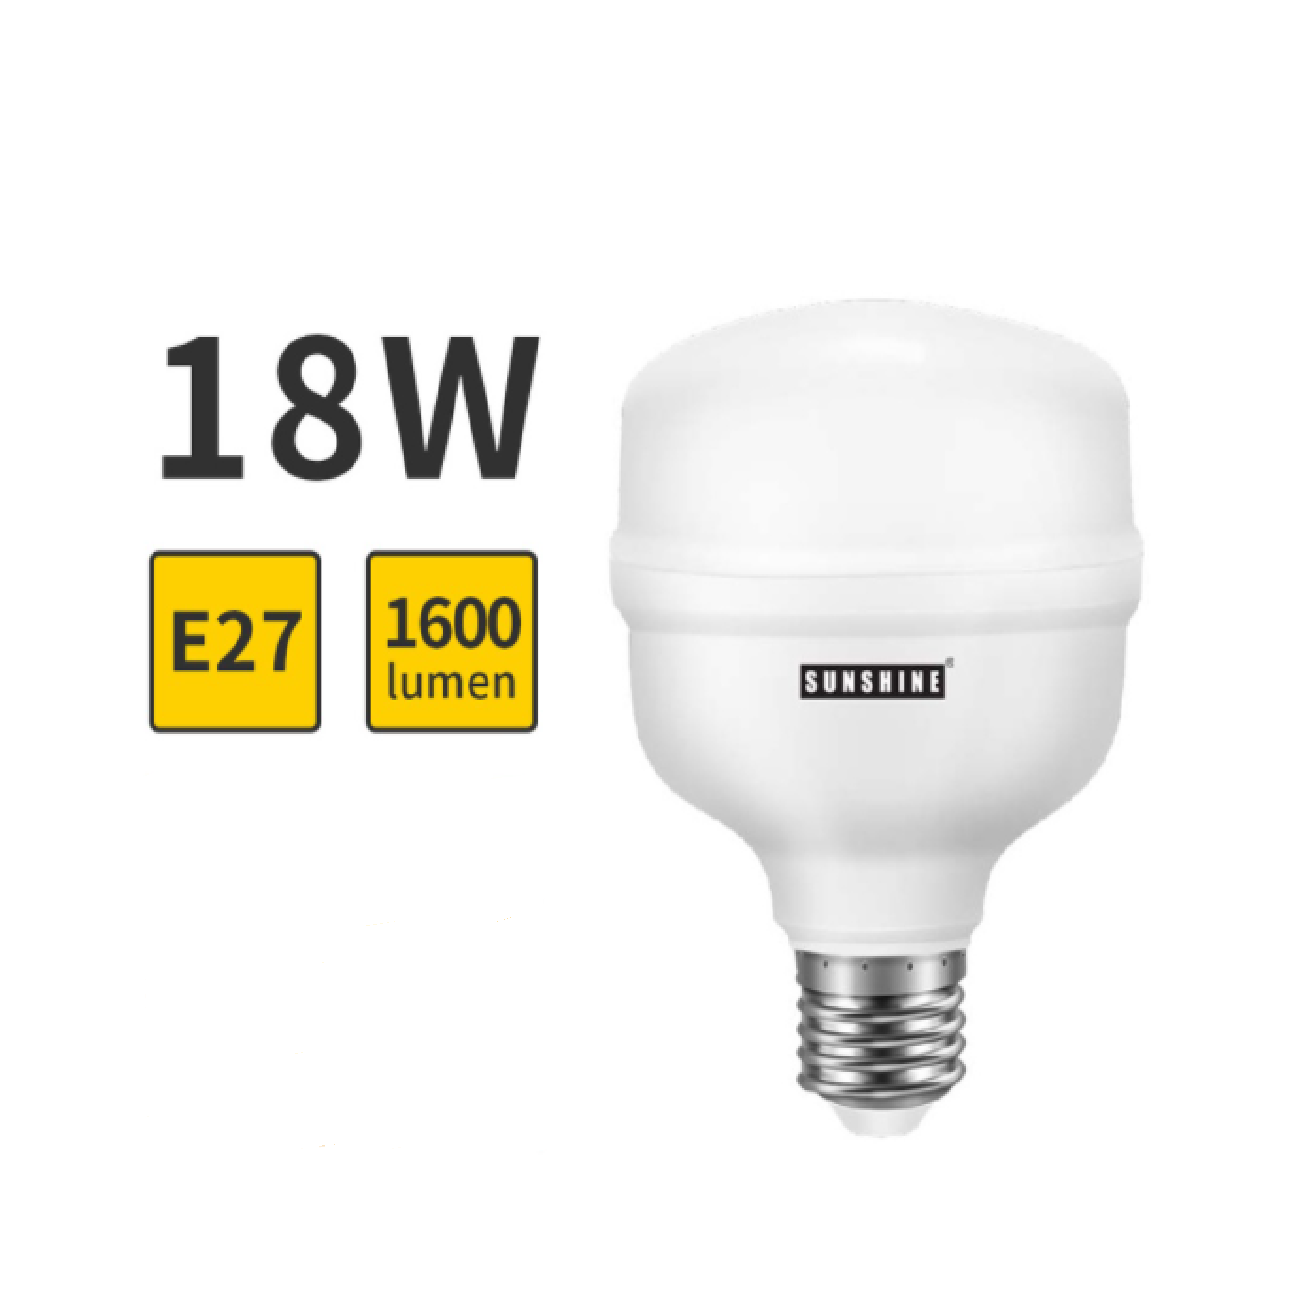 Sunshine 18W LED High Power Light Bulb (Up To 1530 Lumens) E27